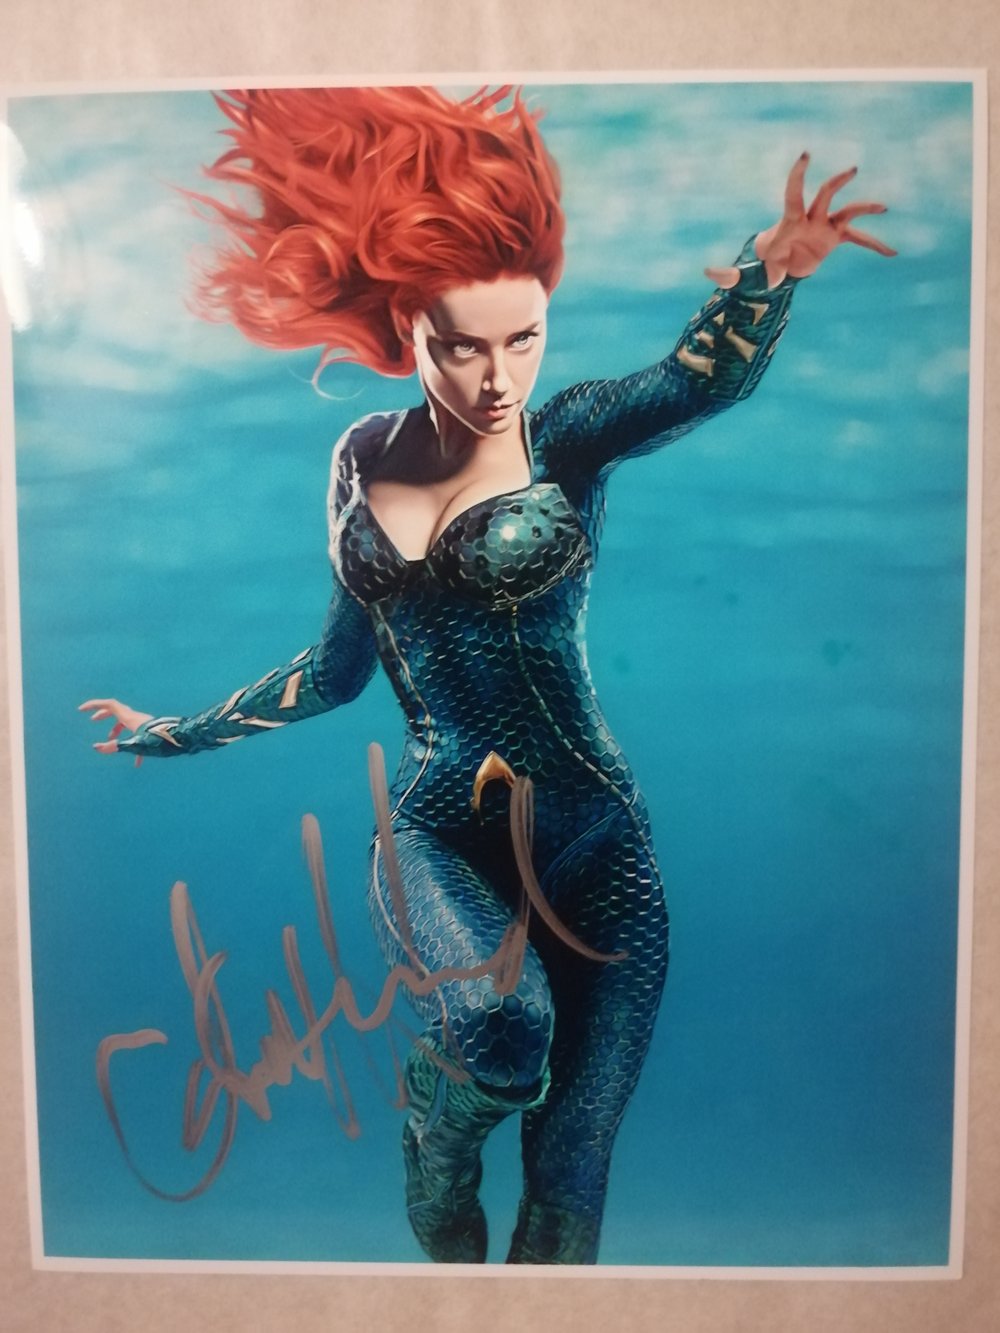 Aquaman Mera Signed by Amber Heard 10x8